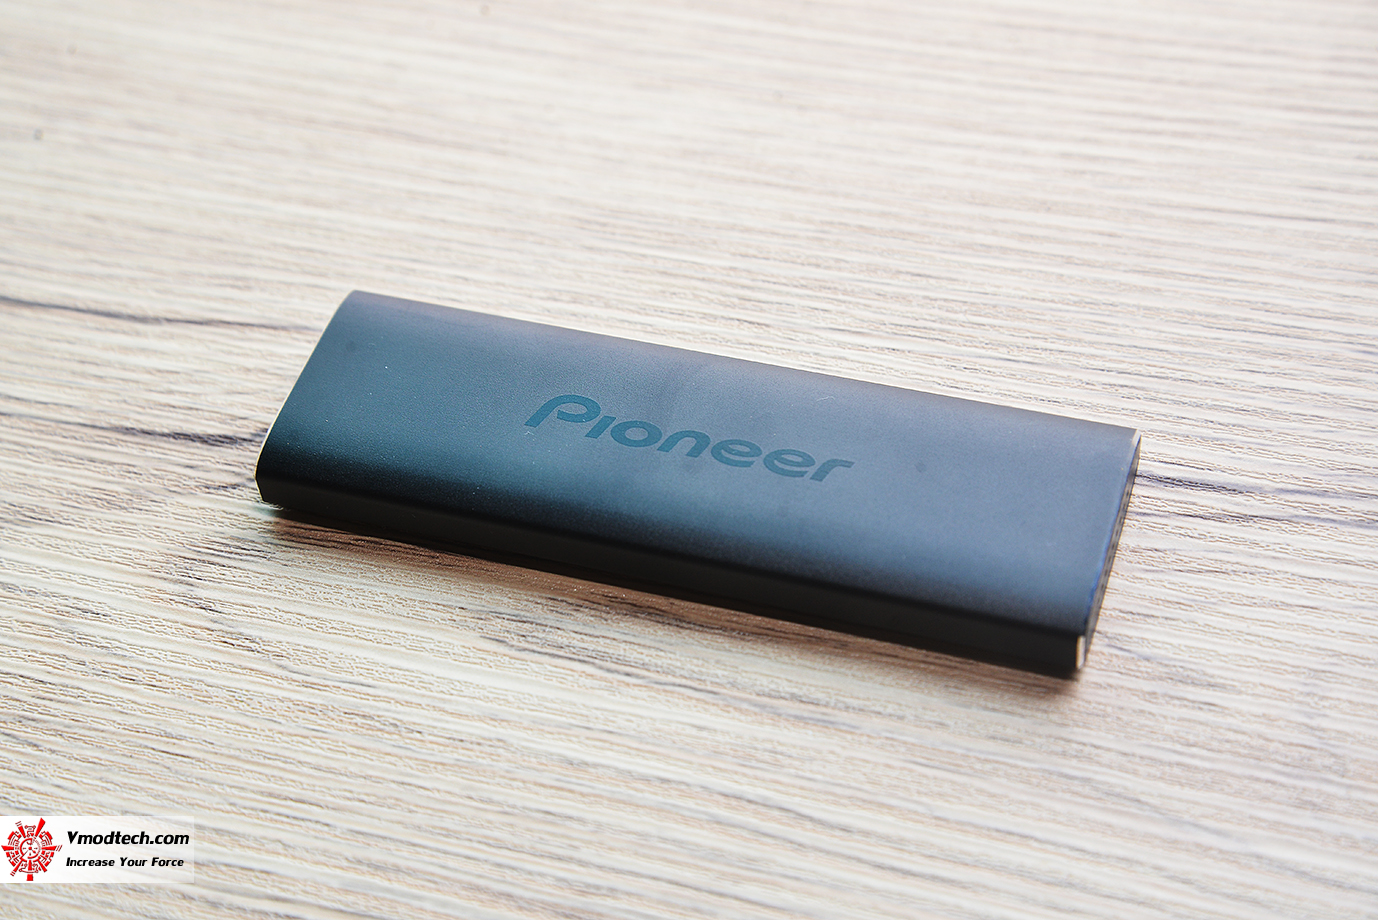 dsc 1673 PIONEER PORTABLE SSD 256G APS XS05 PRO REVIEW 